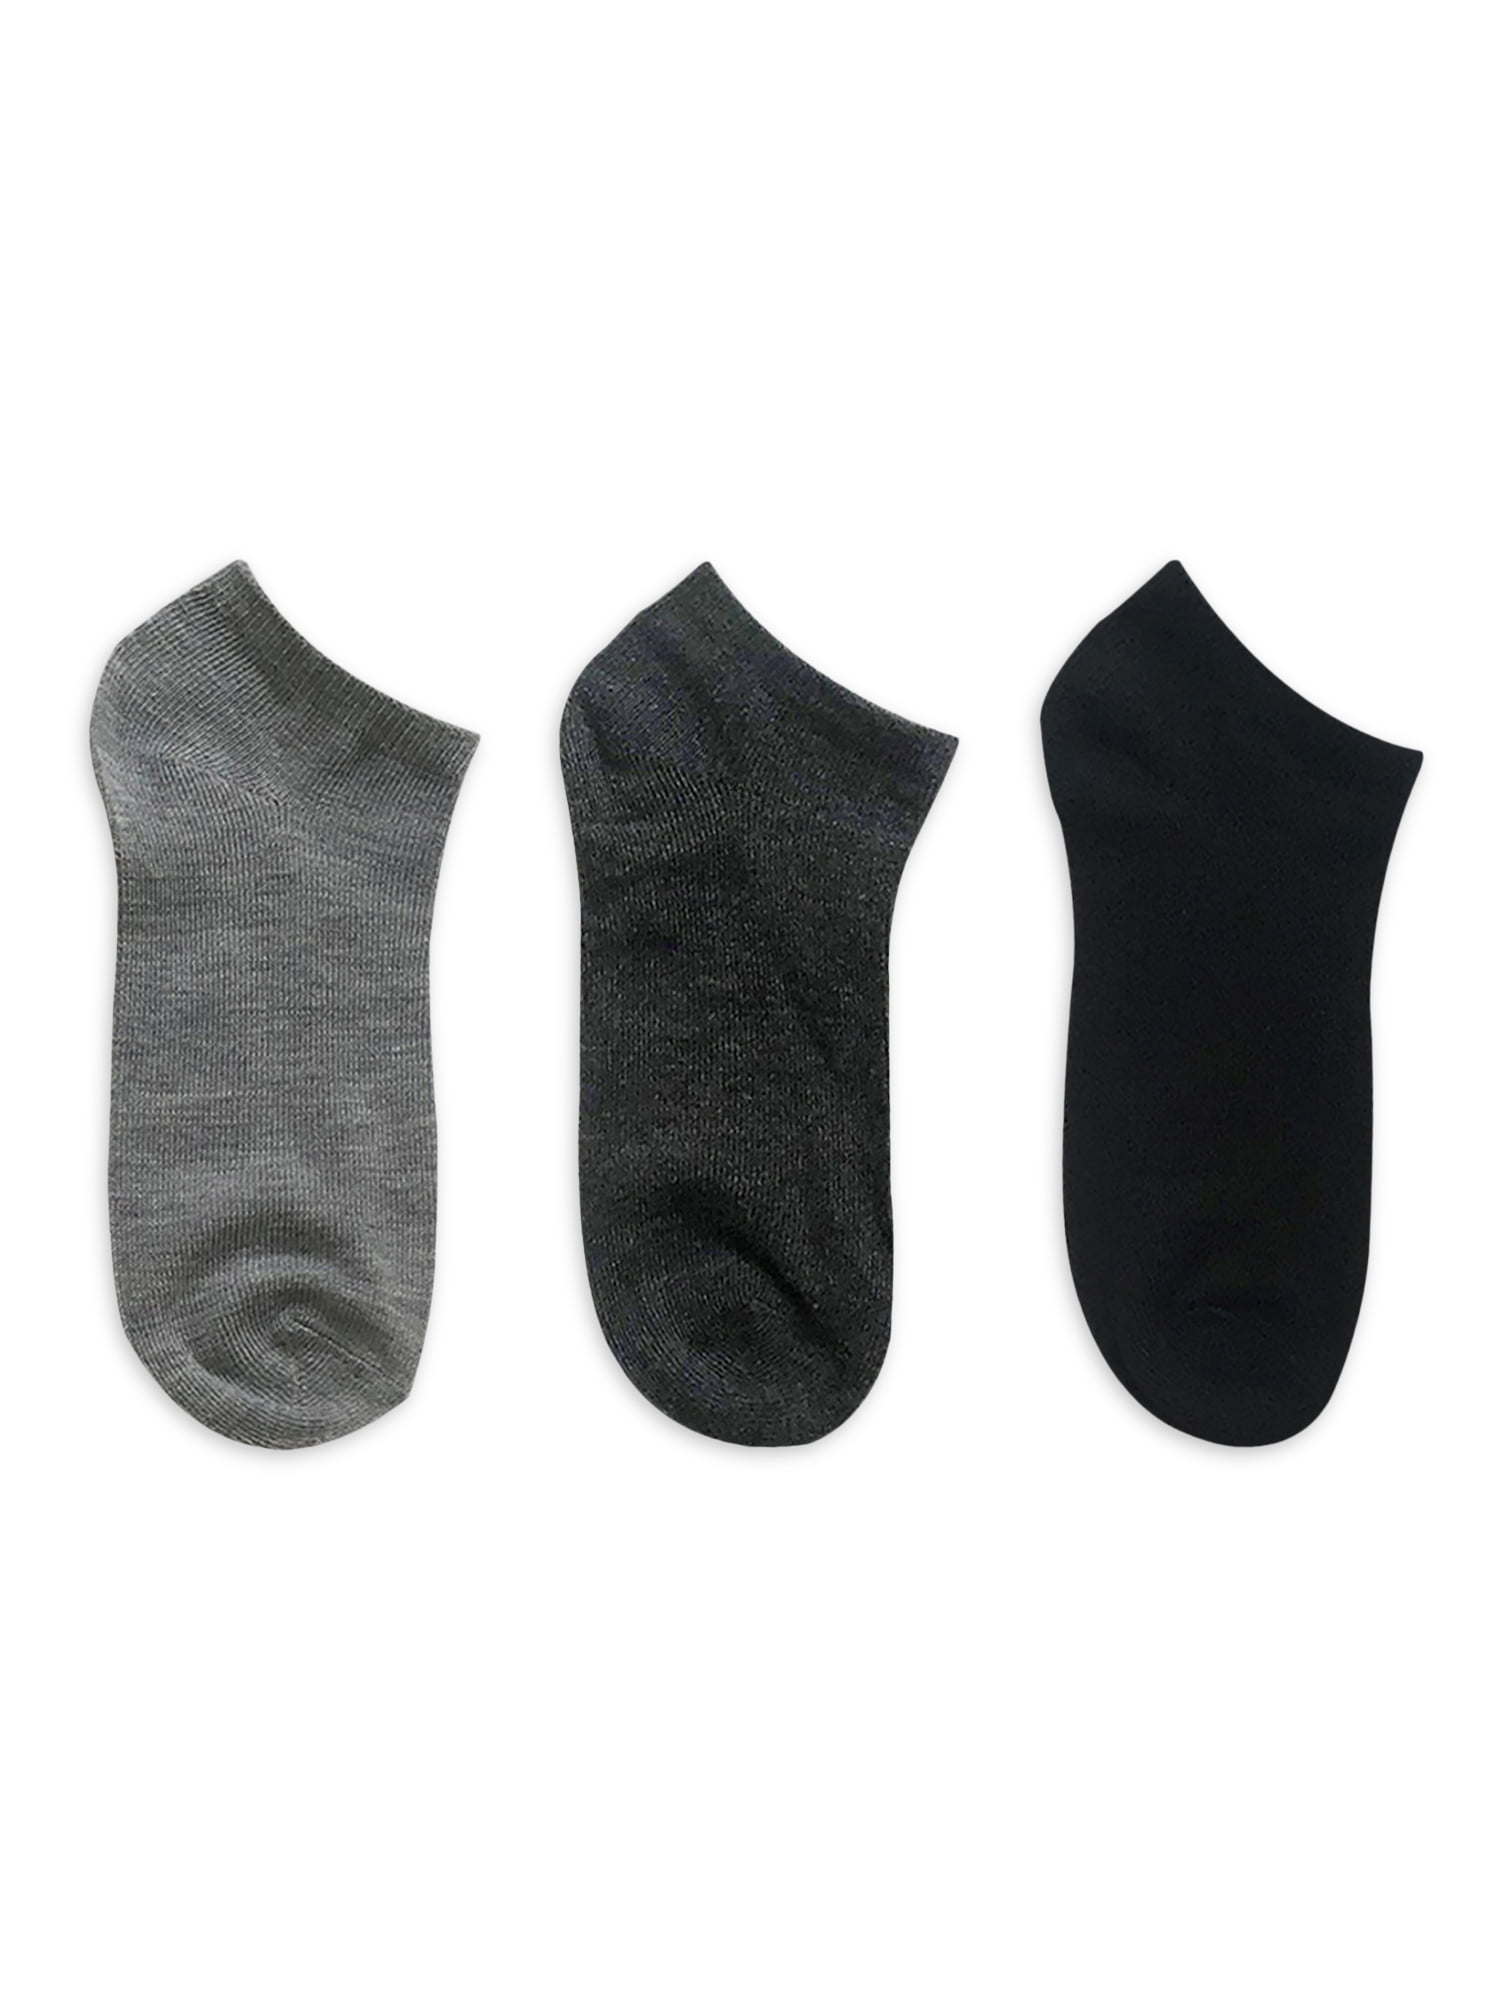 Wonder Nation Boys Flat Knit No Show Socks, 3-Pack S (4-8.5) - L (3-9 ...